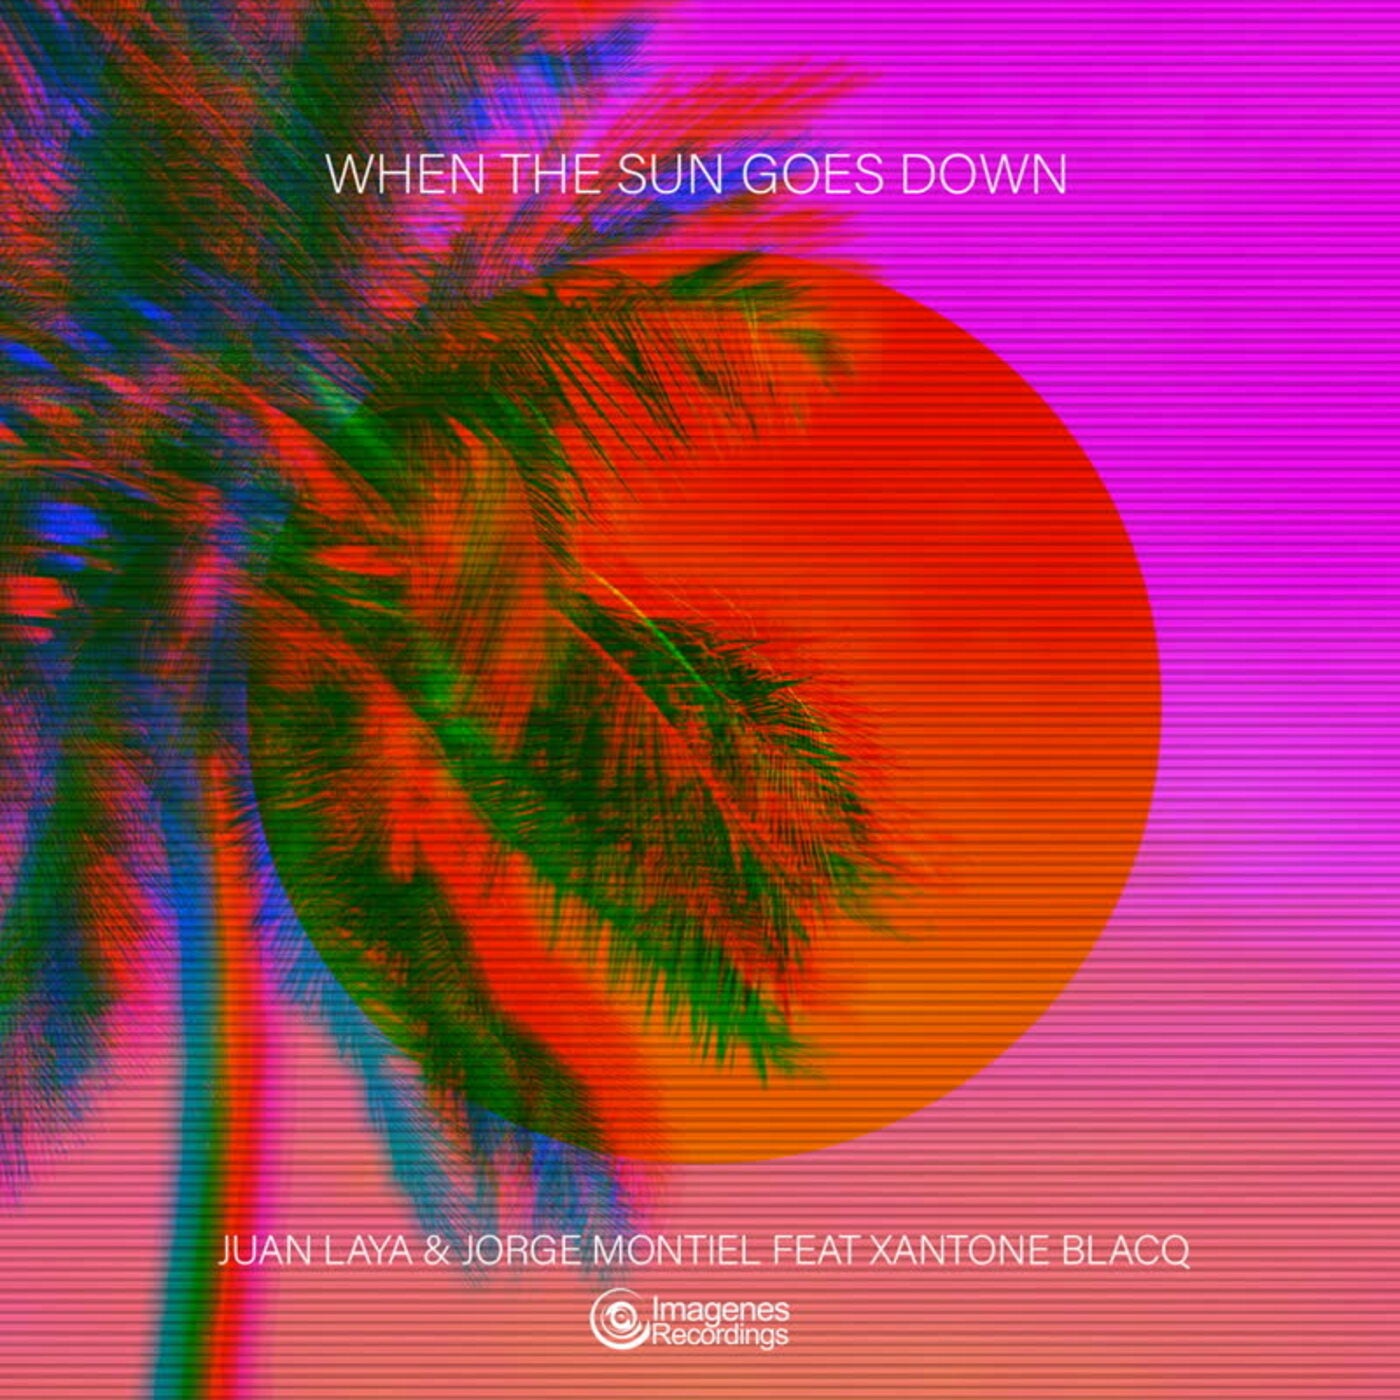 When the Sun Goes Down (feat. Xantone Blacq)